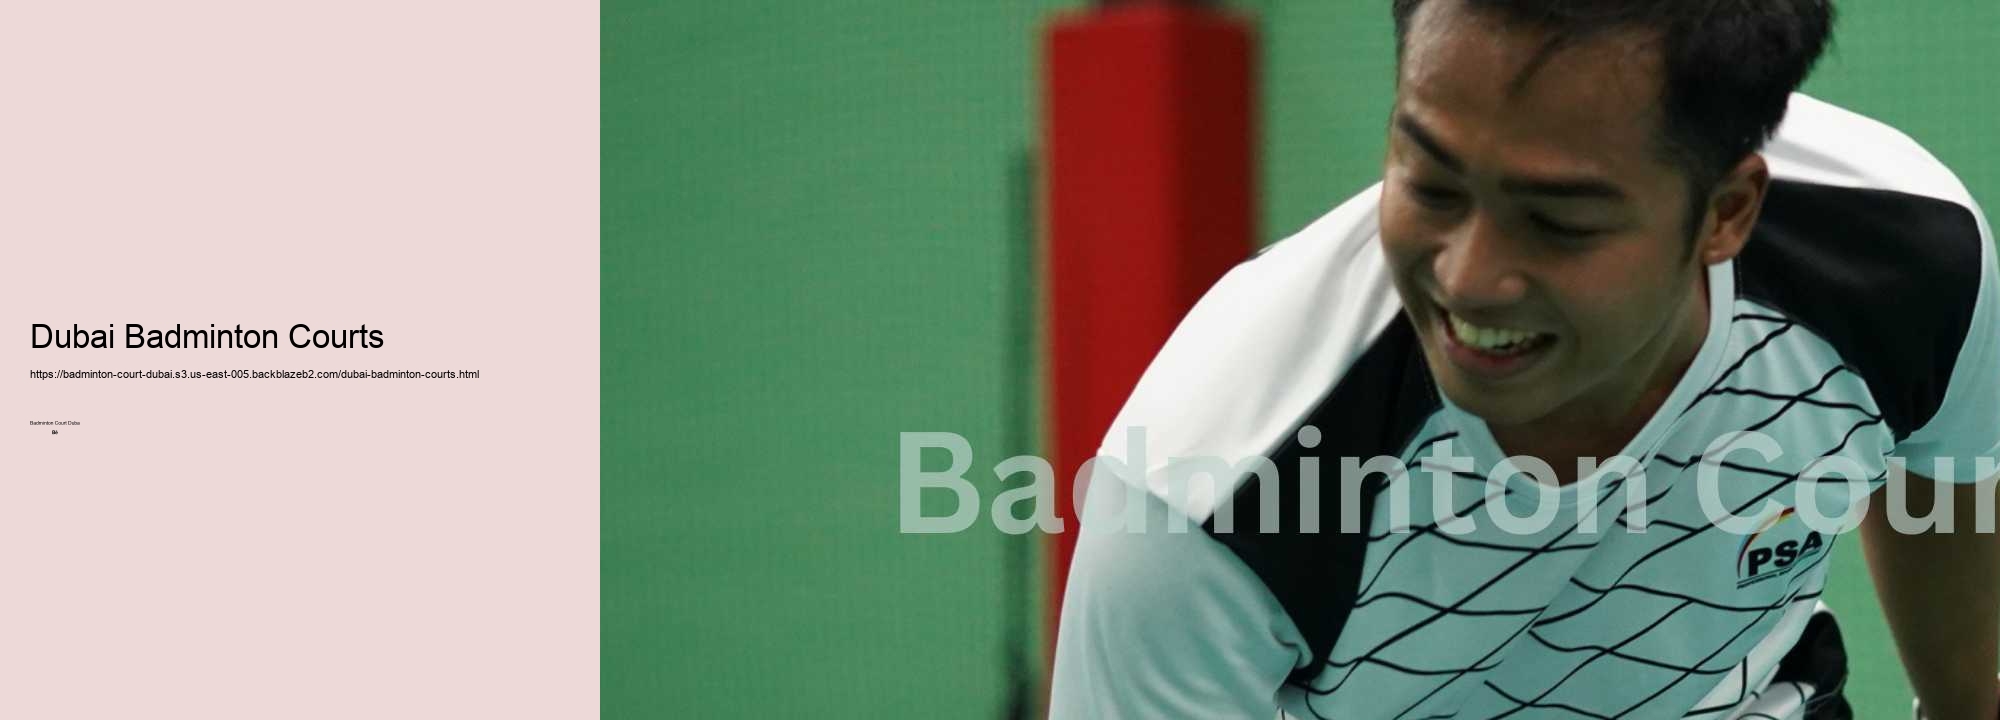 Dubai Badminton Courts